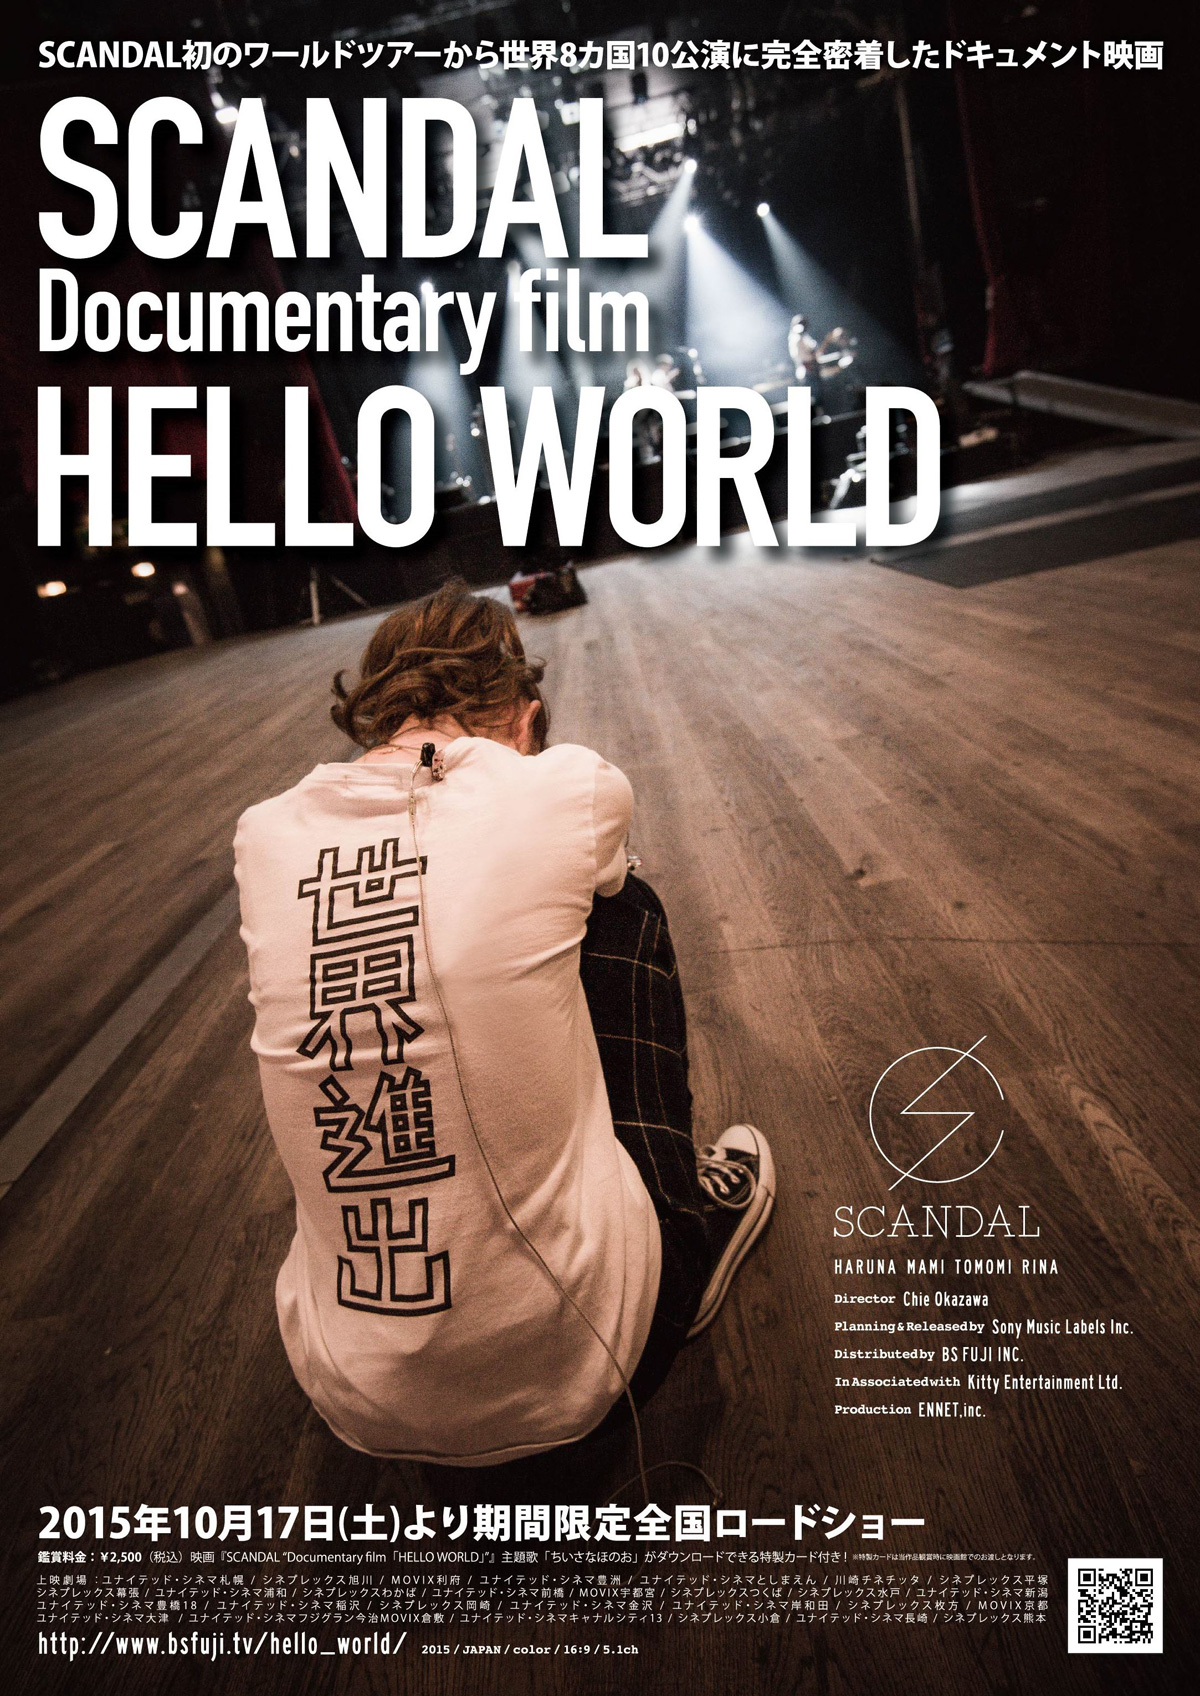 SCANDAL “Documentary film「HELLO WORLD」”の画像